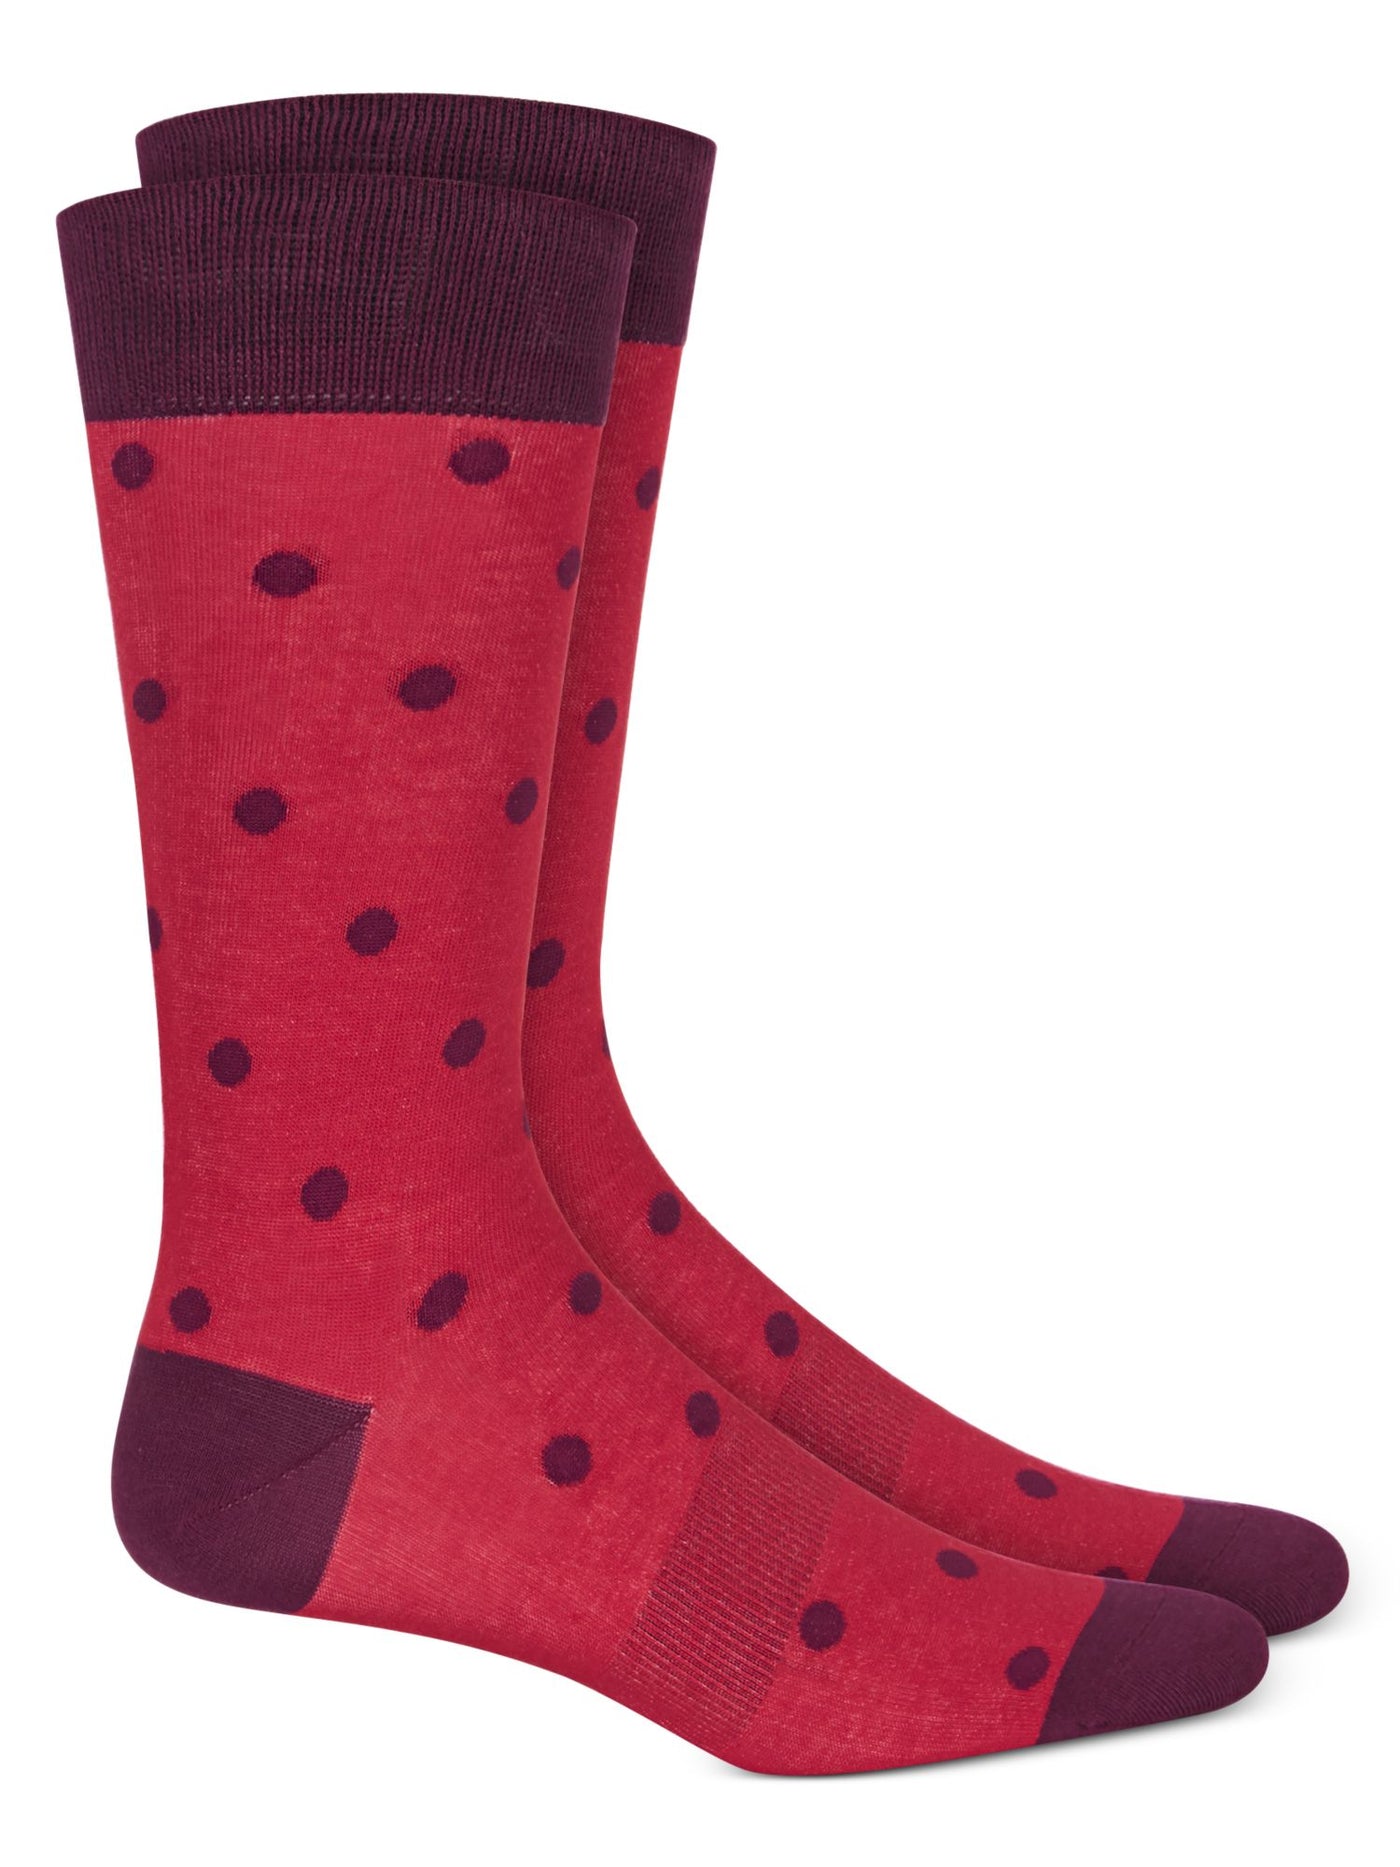 BAR III Red Polka Dot Arch Support Seamless Toe Dress Crew Socks